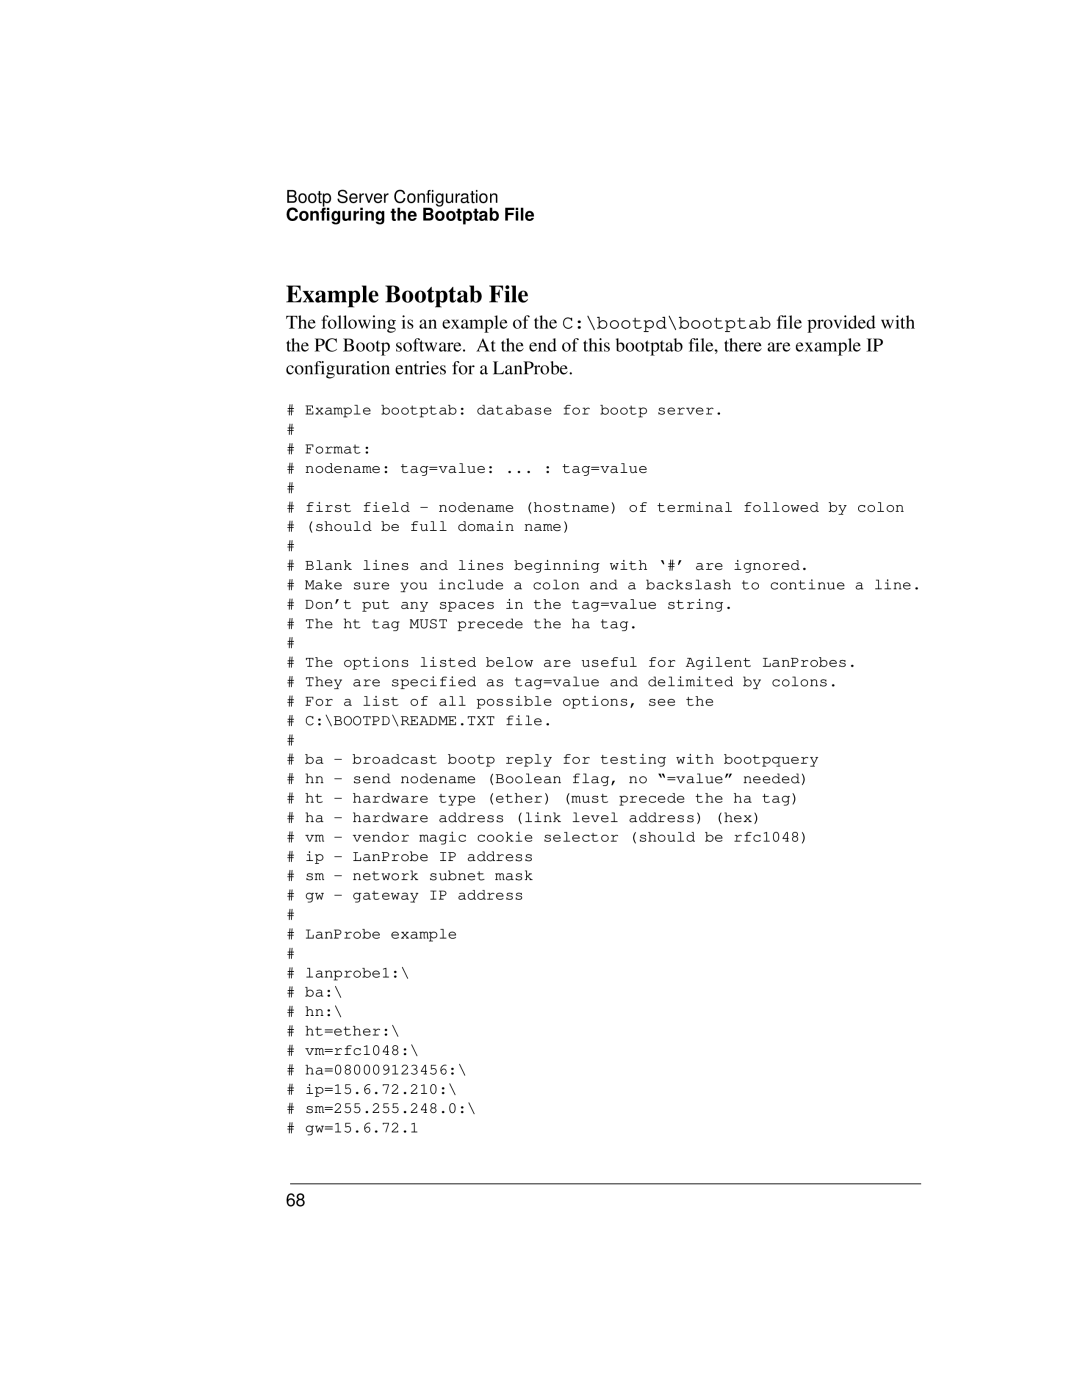 IBM 4986B LanProbe manual Example Bootptab File, Bootp Server Configuration, Configuring the Bootptab File 